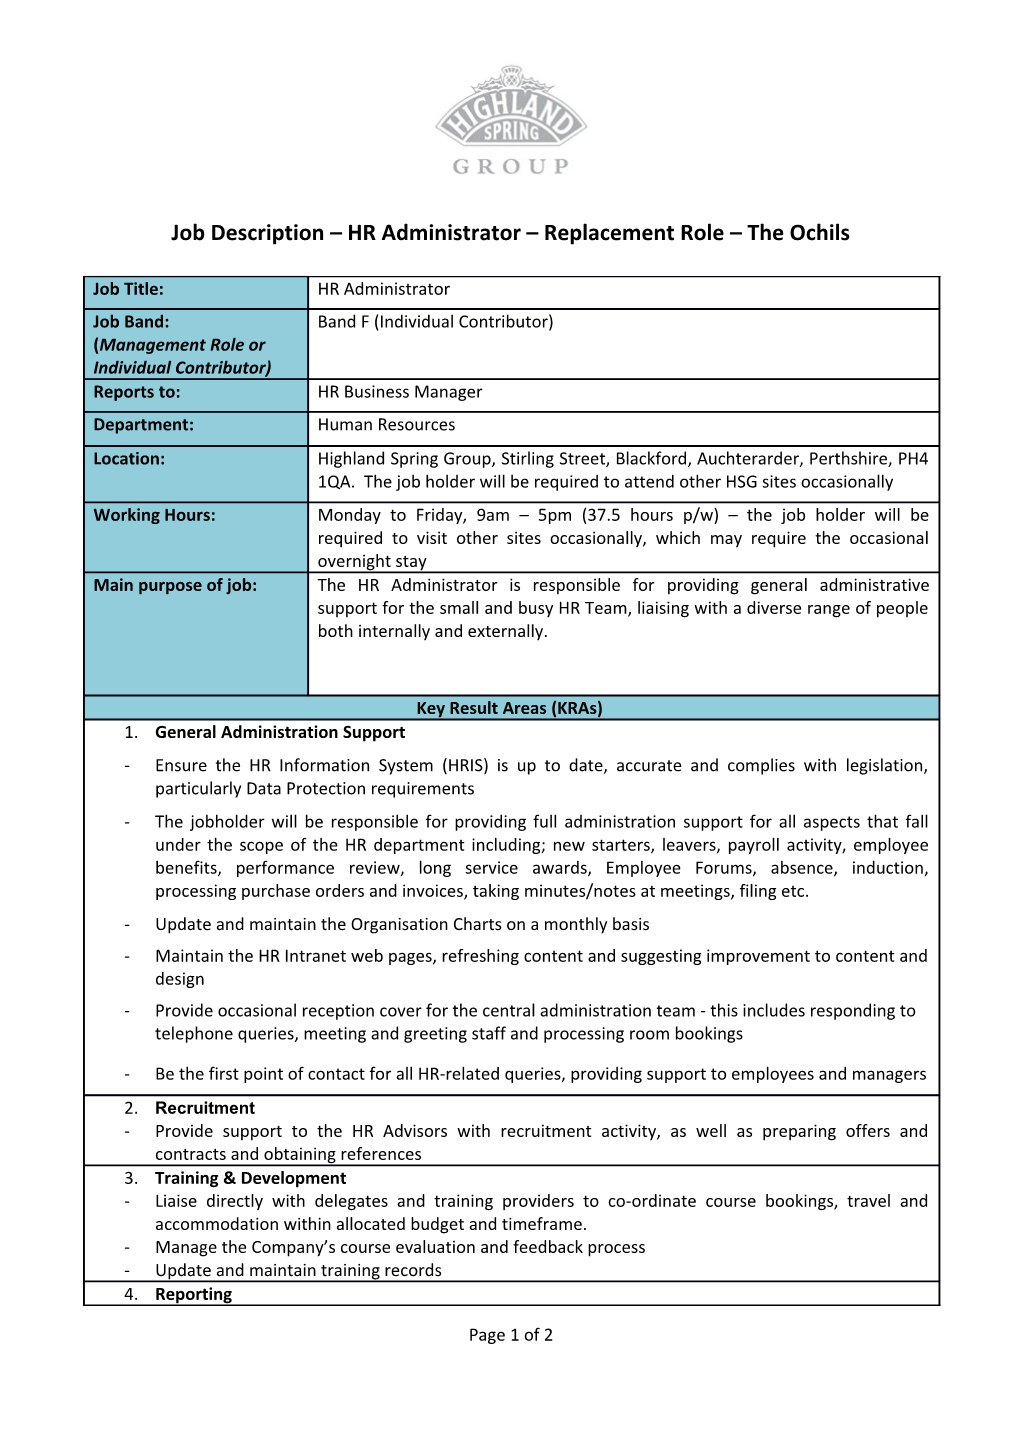 Job Description HR Administrator Replacement Role the Ochils